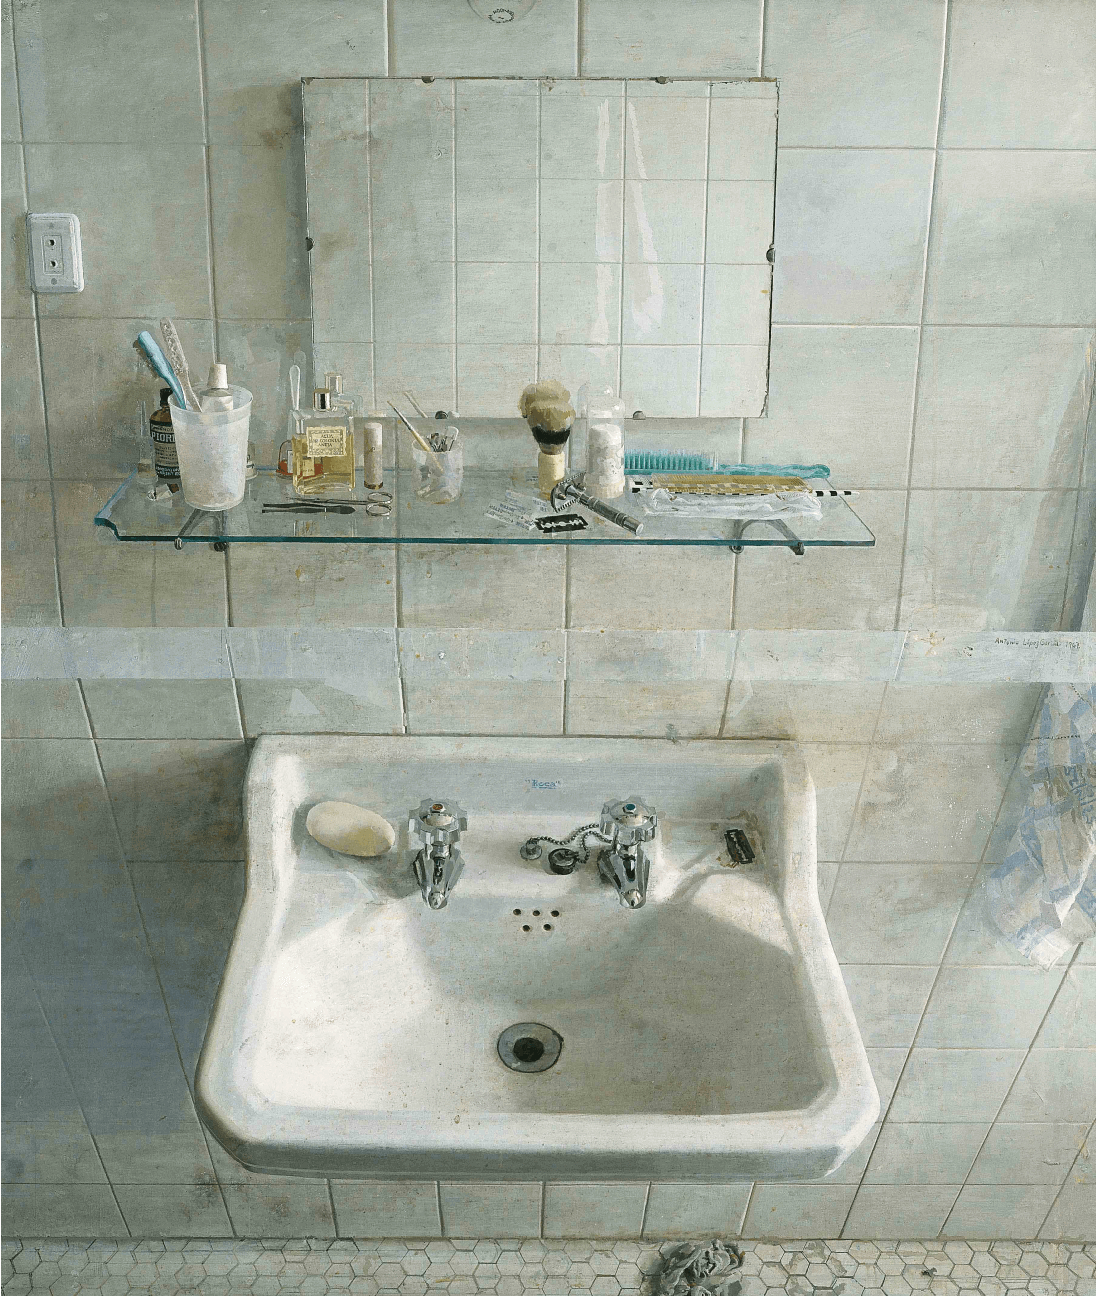 Antonio Lopez Garcia, Sink and Mirror, oil on wood, 1967 (Museum of Fine Arts, Boston)